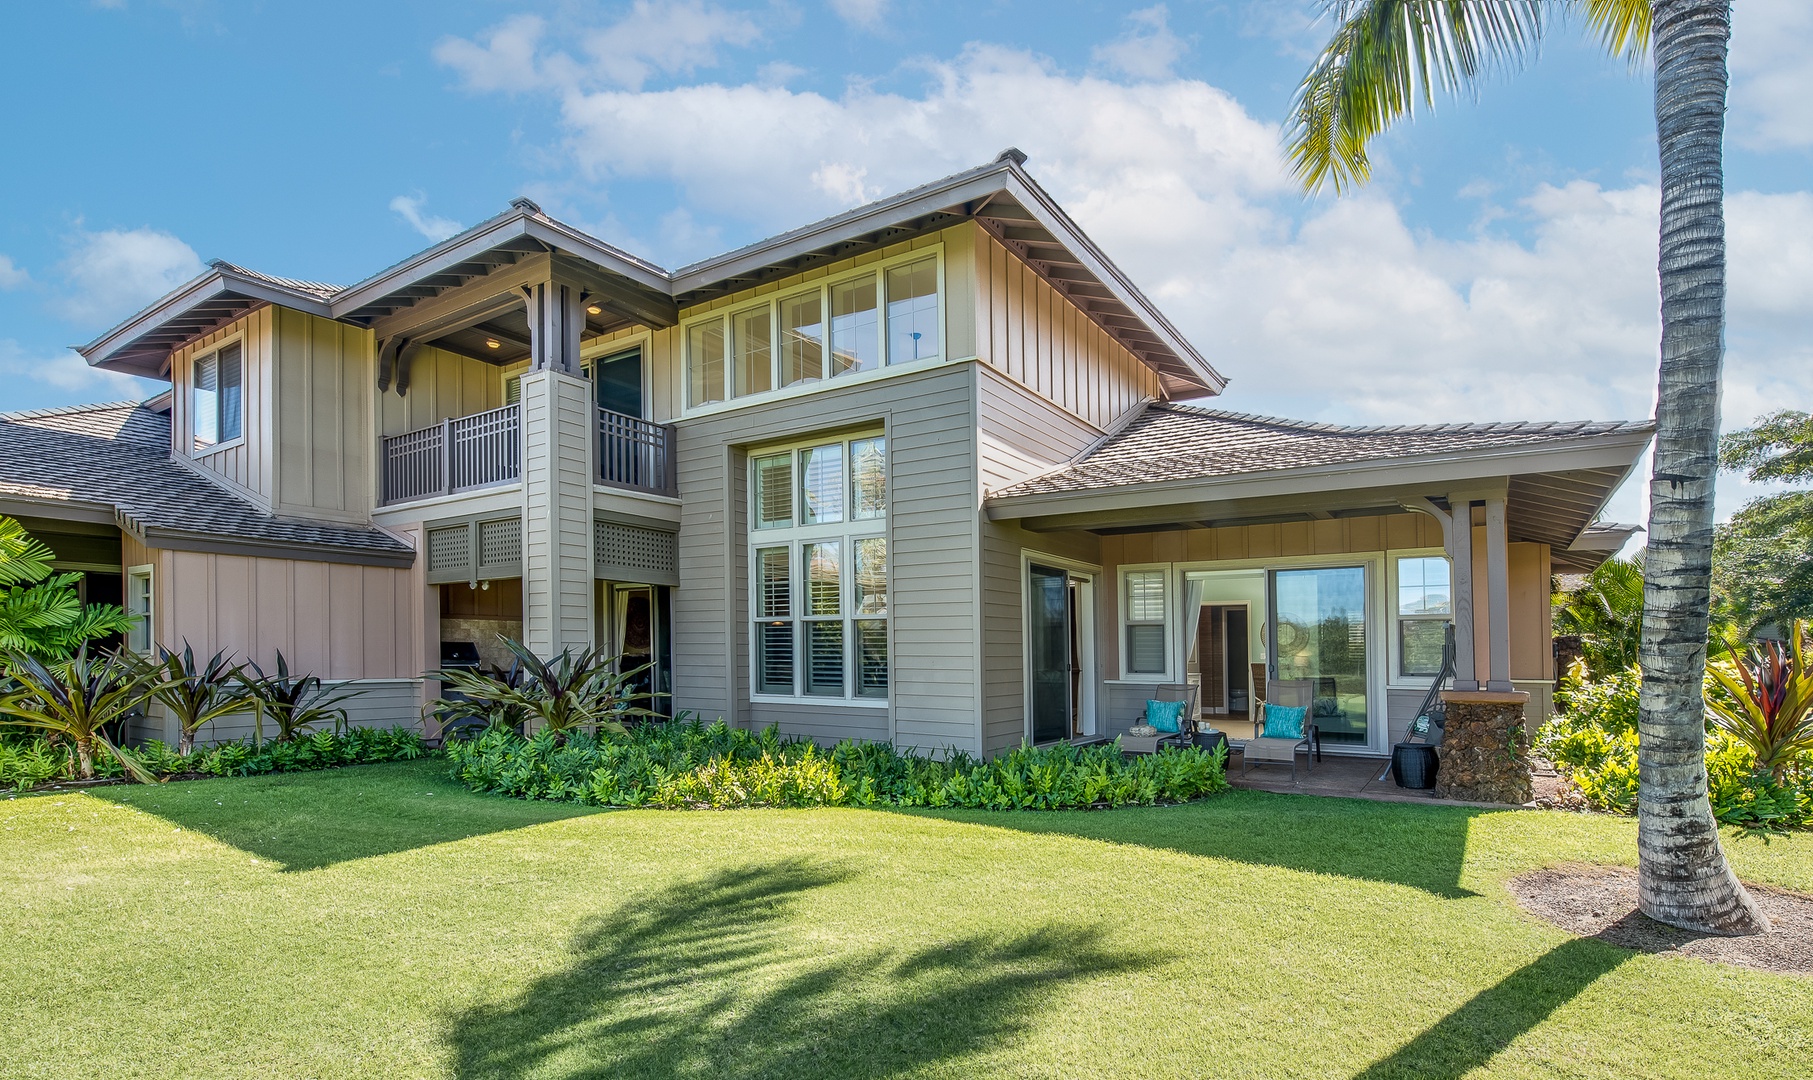 Kamuela Vacation Rentals, Kulalani 1701 at Mauna Lani - View from Backyard Shows All the Windows Letting in Splendid Sunshine!